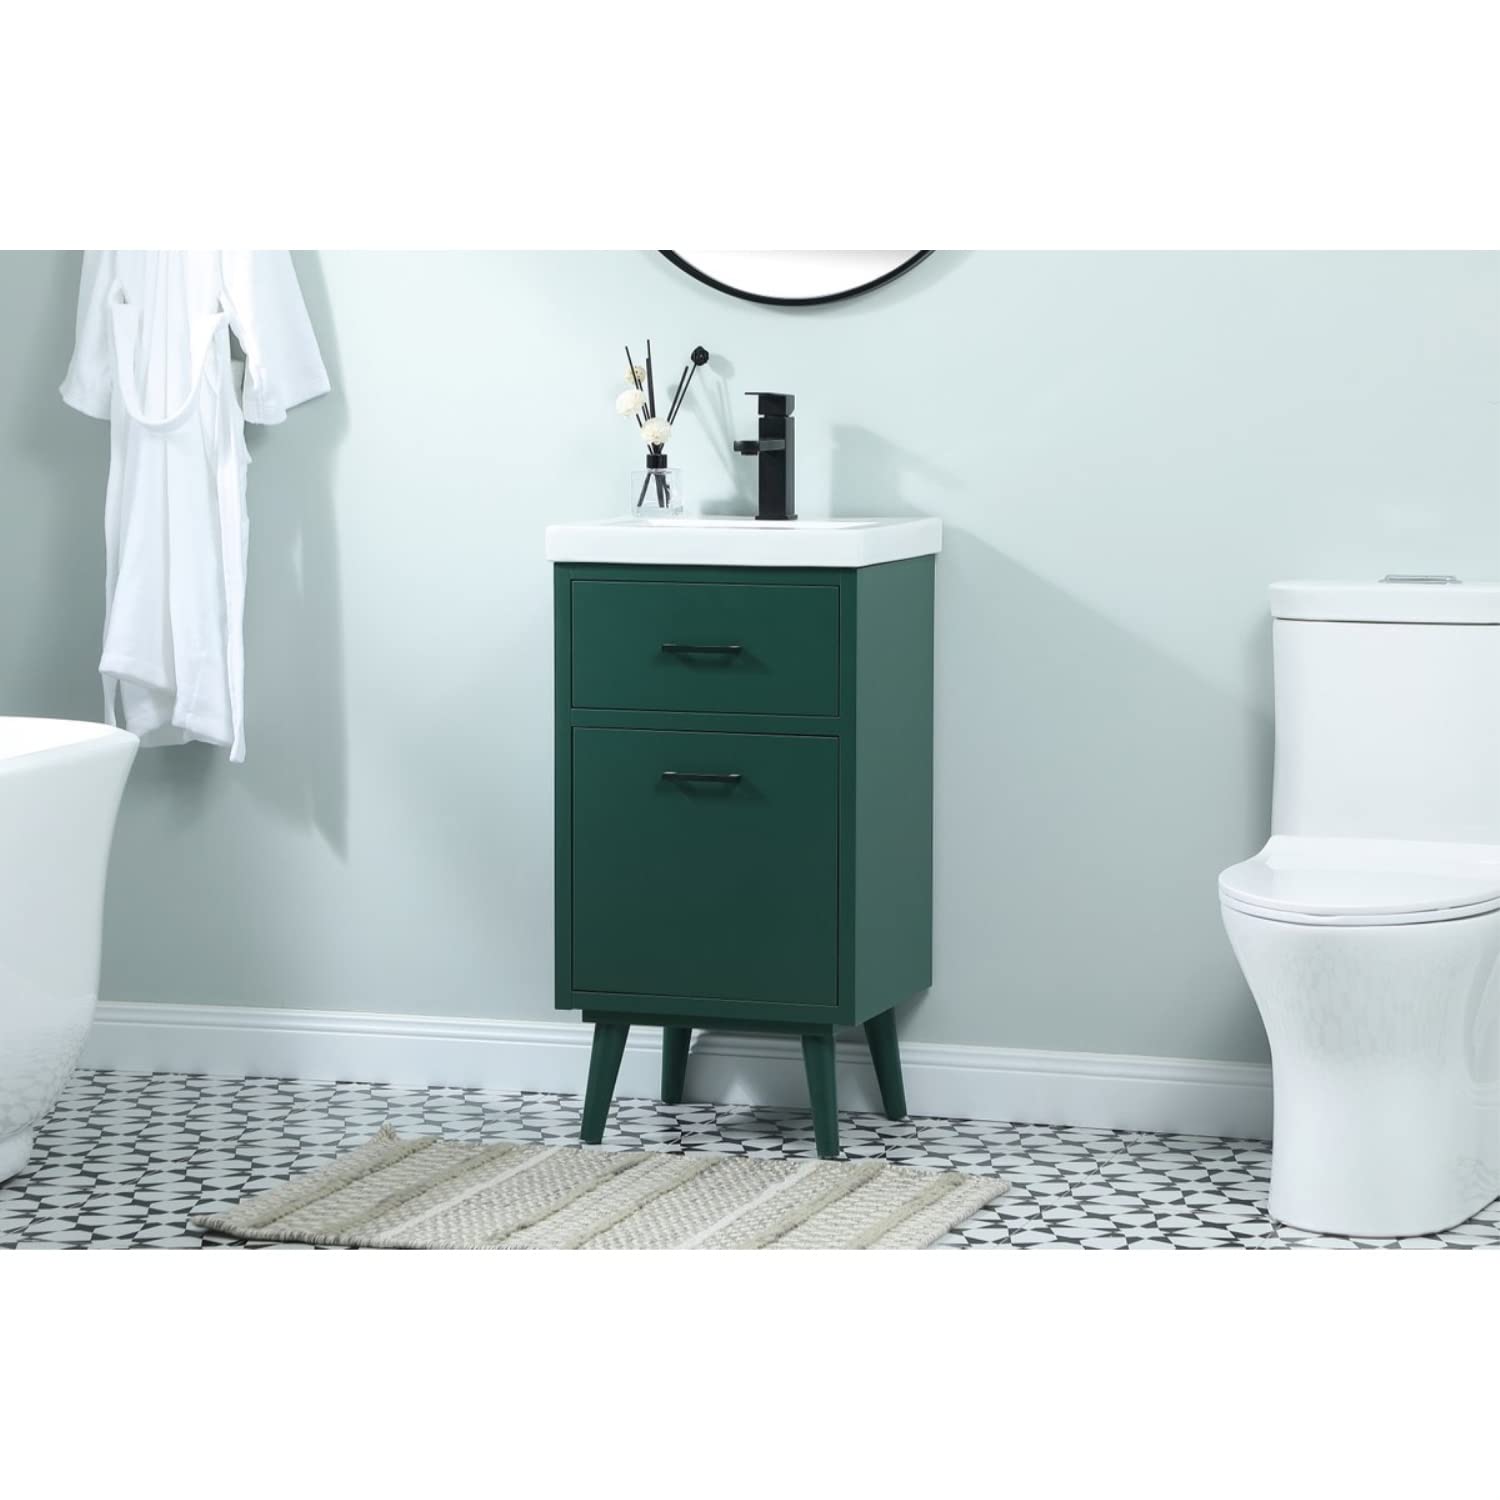 Elegant Decor 18 inch Bathroom Vanity in Green